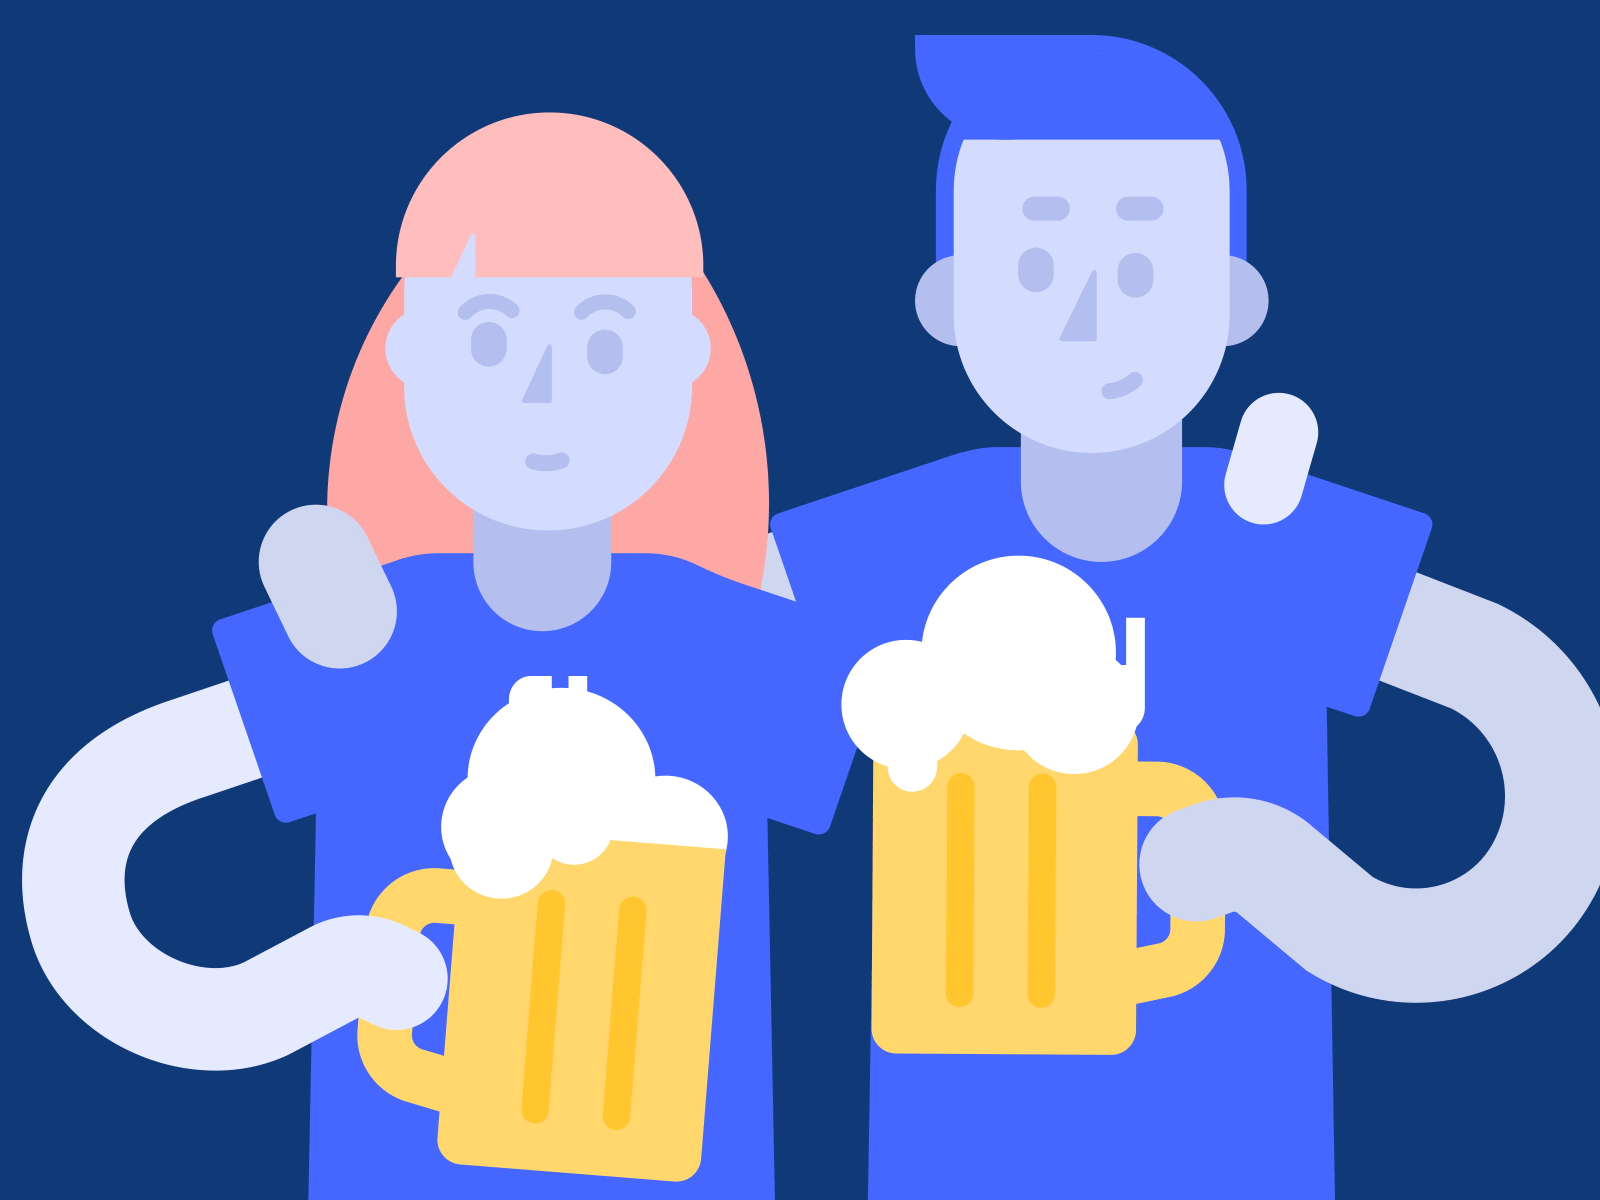 Cheers - animated GIF art design flat icon illustration vector